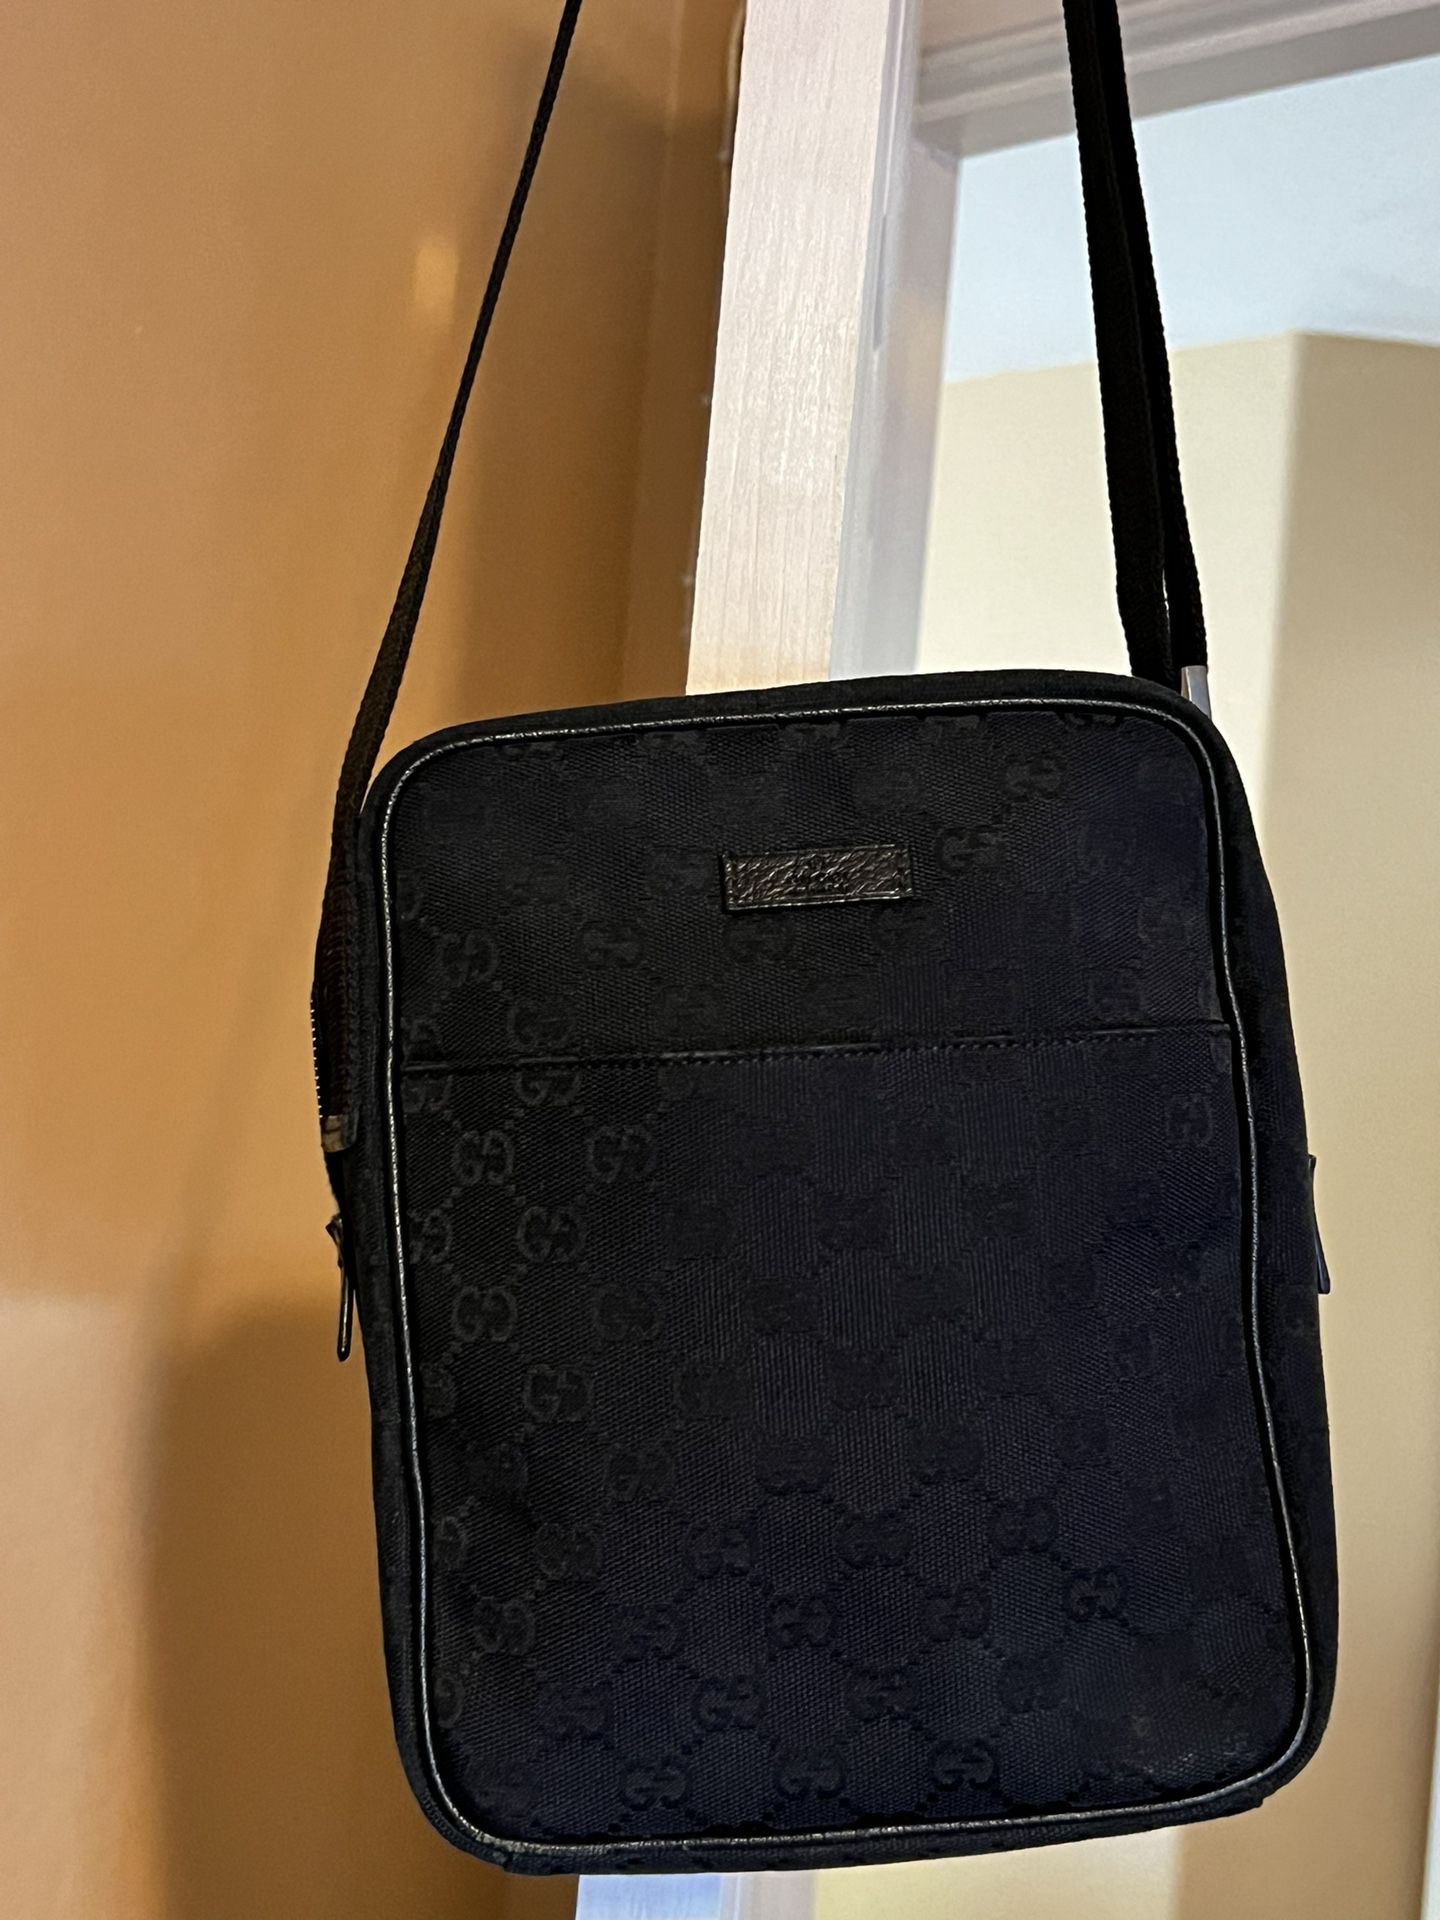 Gucci Shoulder Bag for Sale in Phoenix, AZ - OfferUp